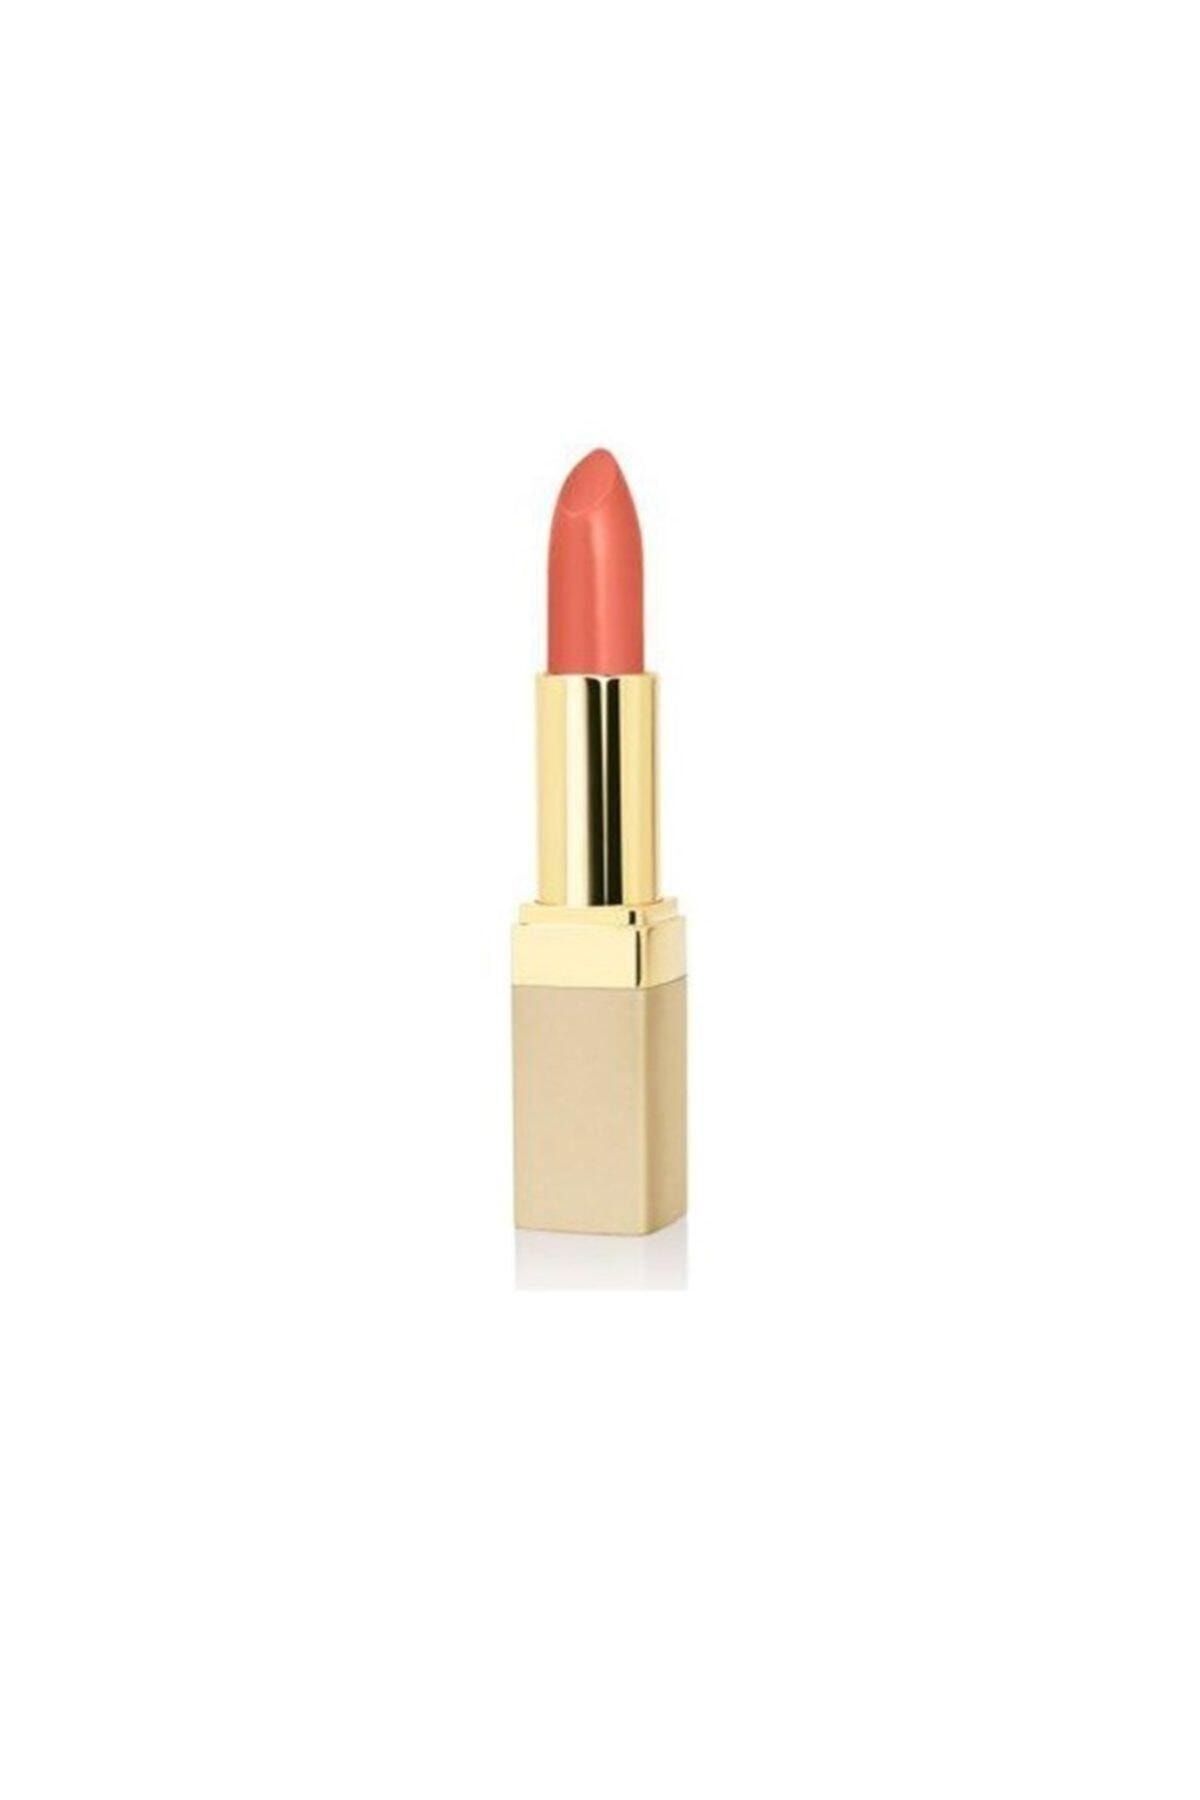 Golden Rose Ruj - Ultra Rich Color Lipstick No: 47 8691190000479